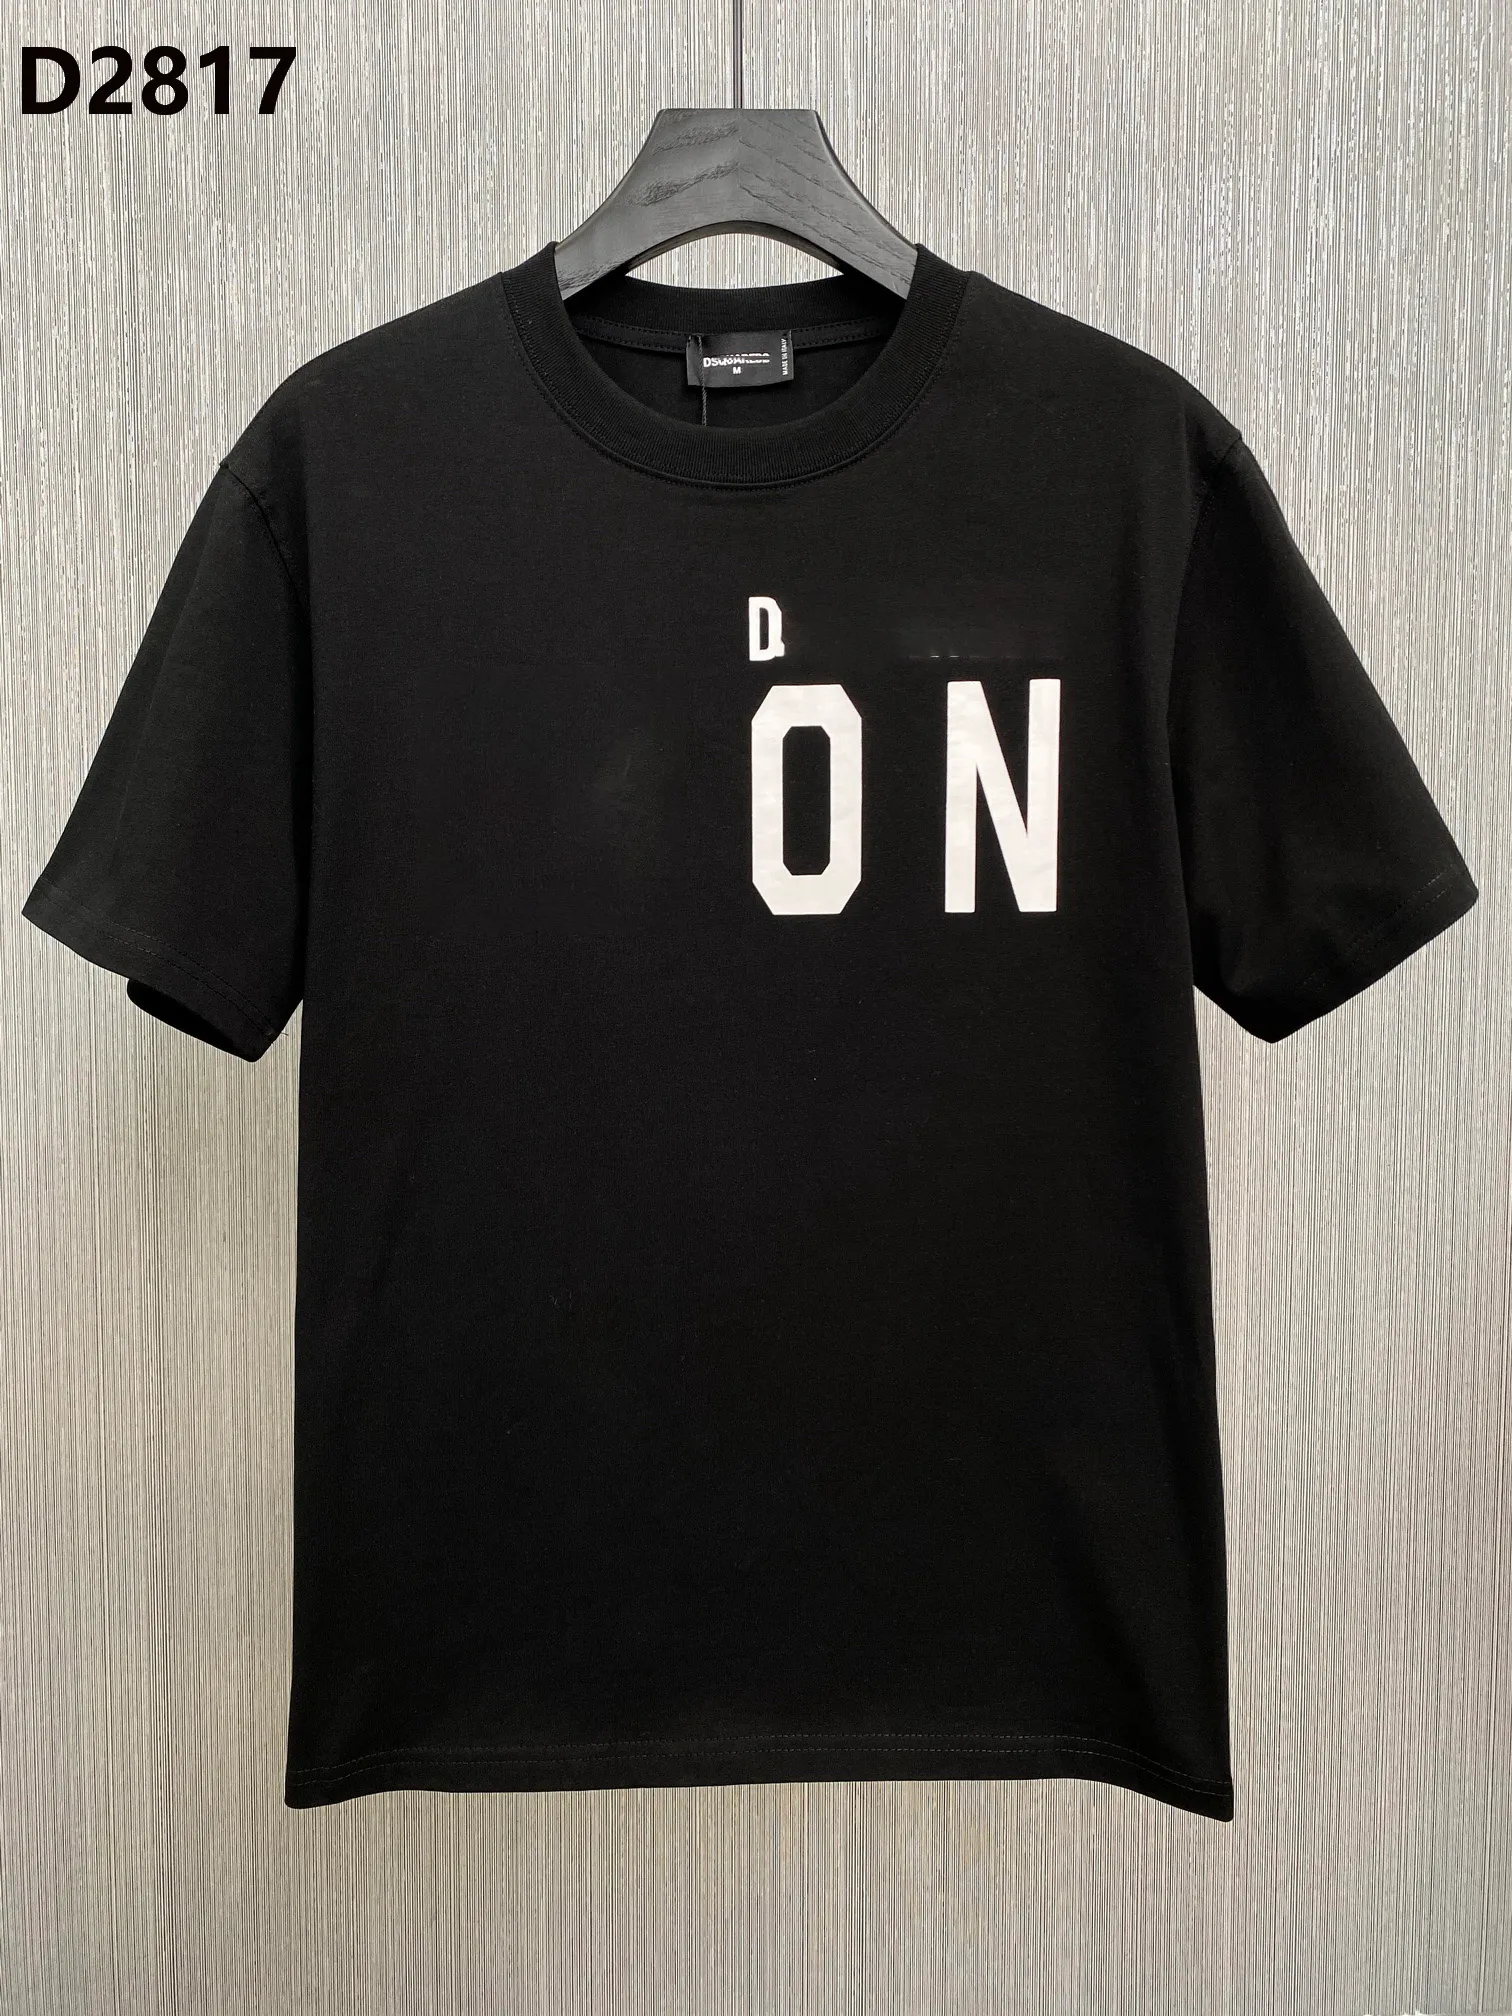 Italia New Mens Designer T shirt Parigi moda magliette Estate D T-shirt maschile Top Quality 100% cotone M-XXXL 28170